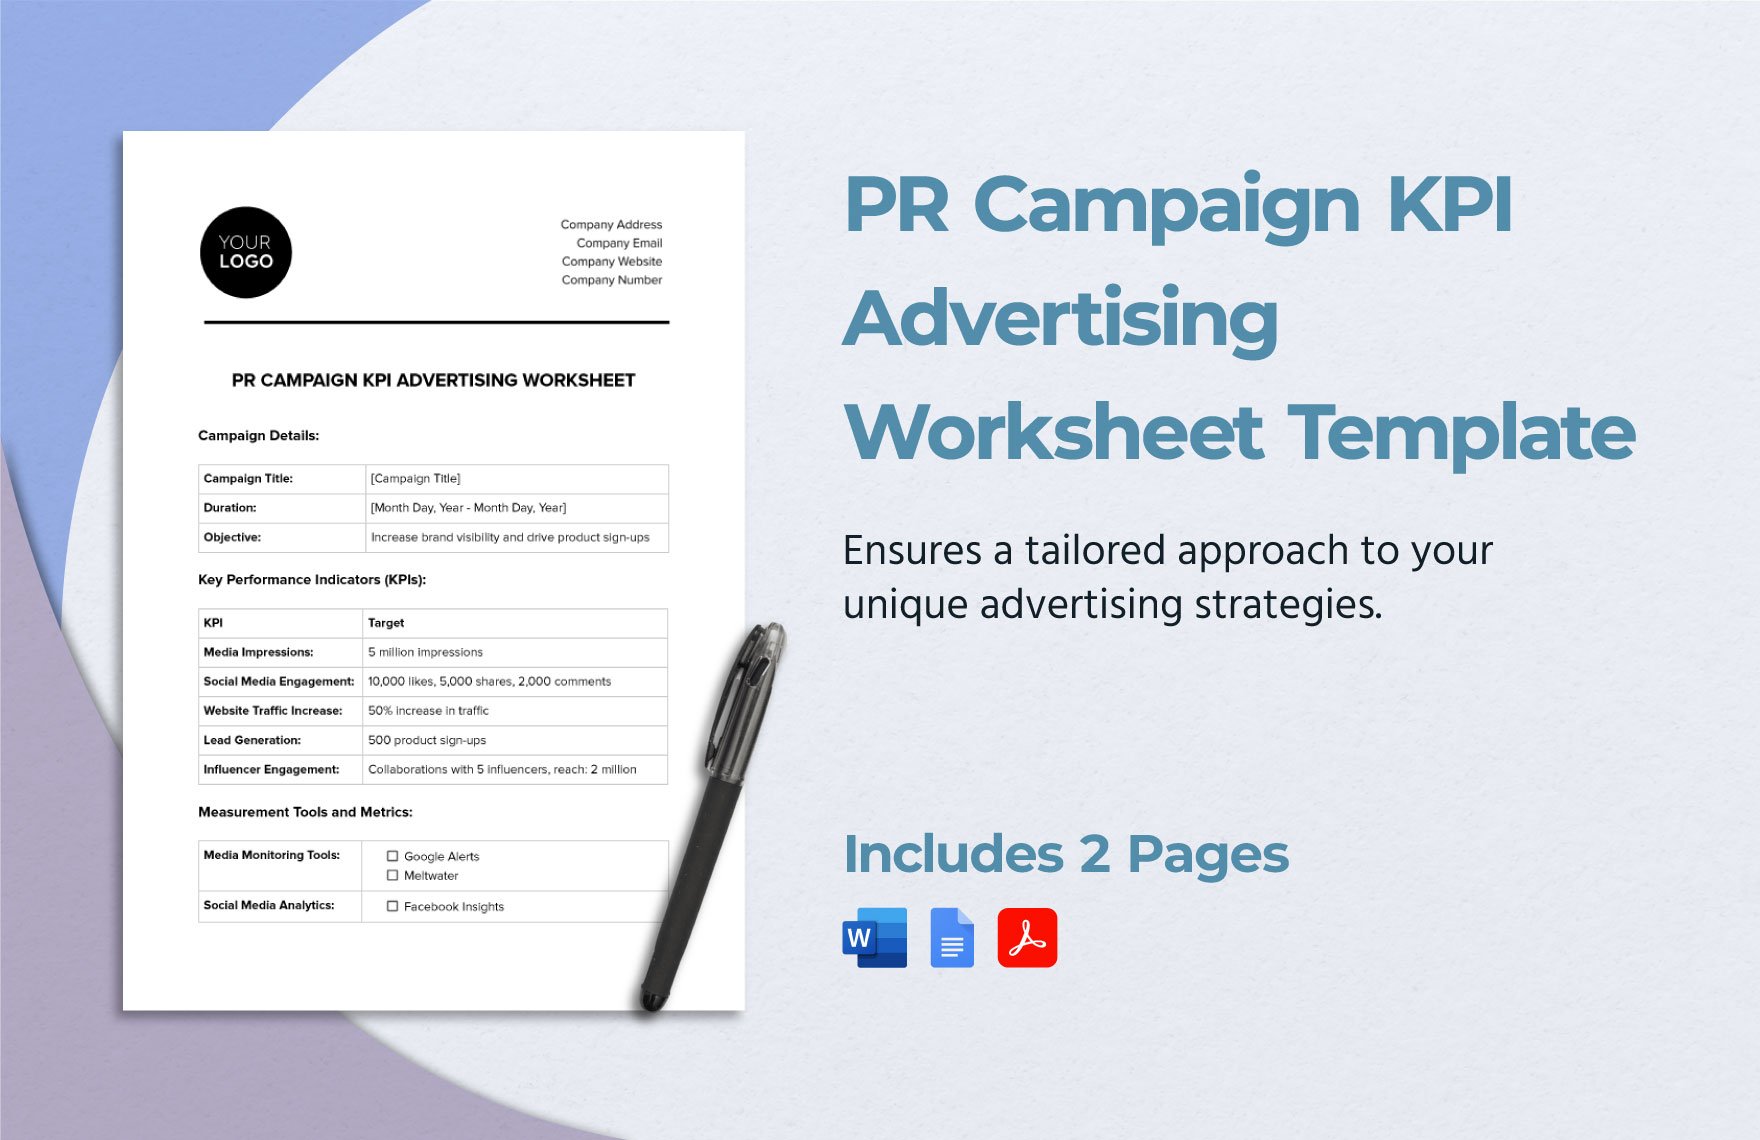 PR Campaign KPI Advertising Worksheet Template